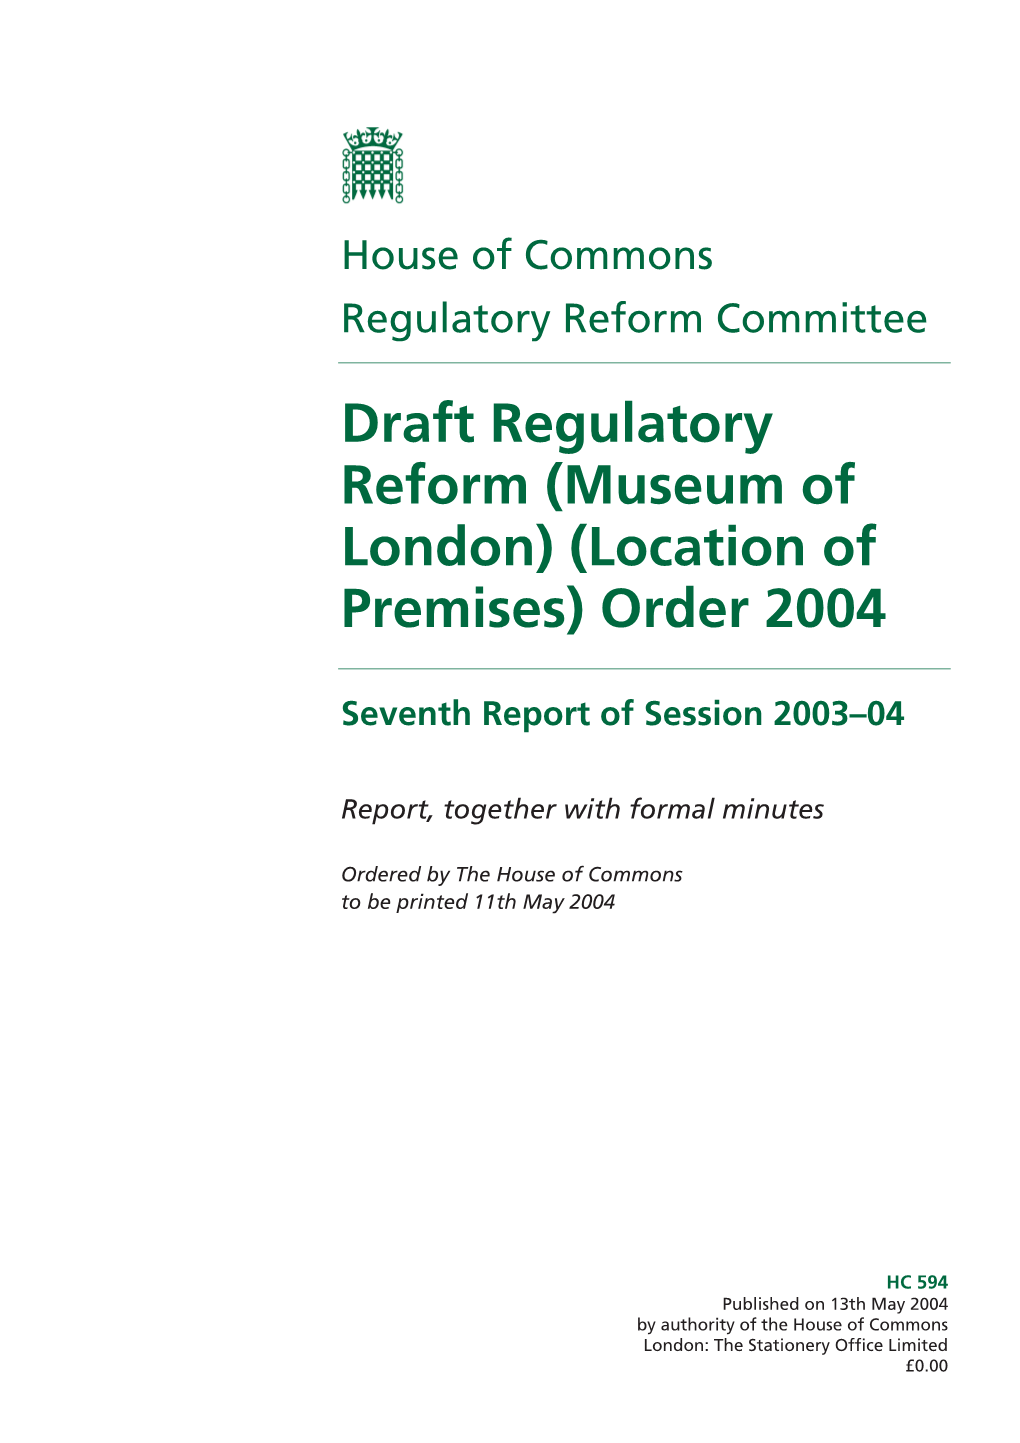 Draft Regulatory Reform (Museum of London) (Location of Premises) Order 2004